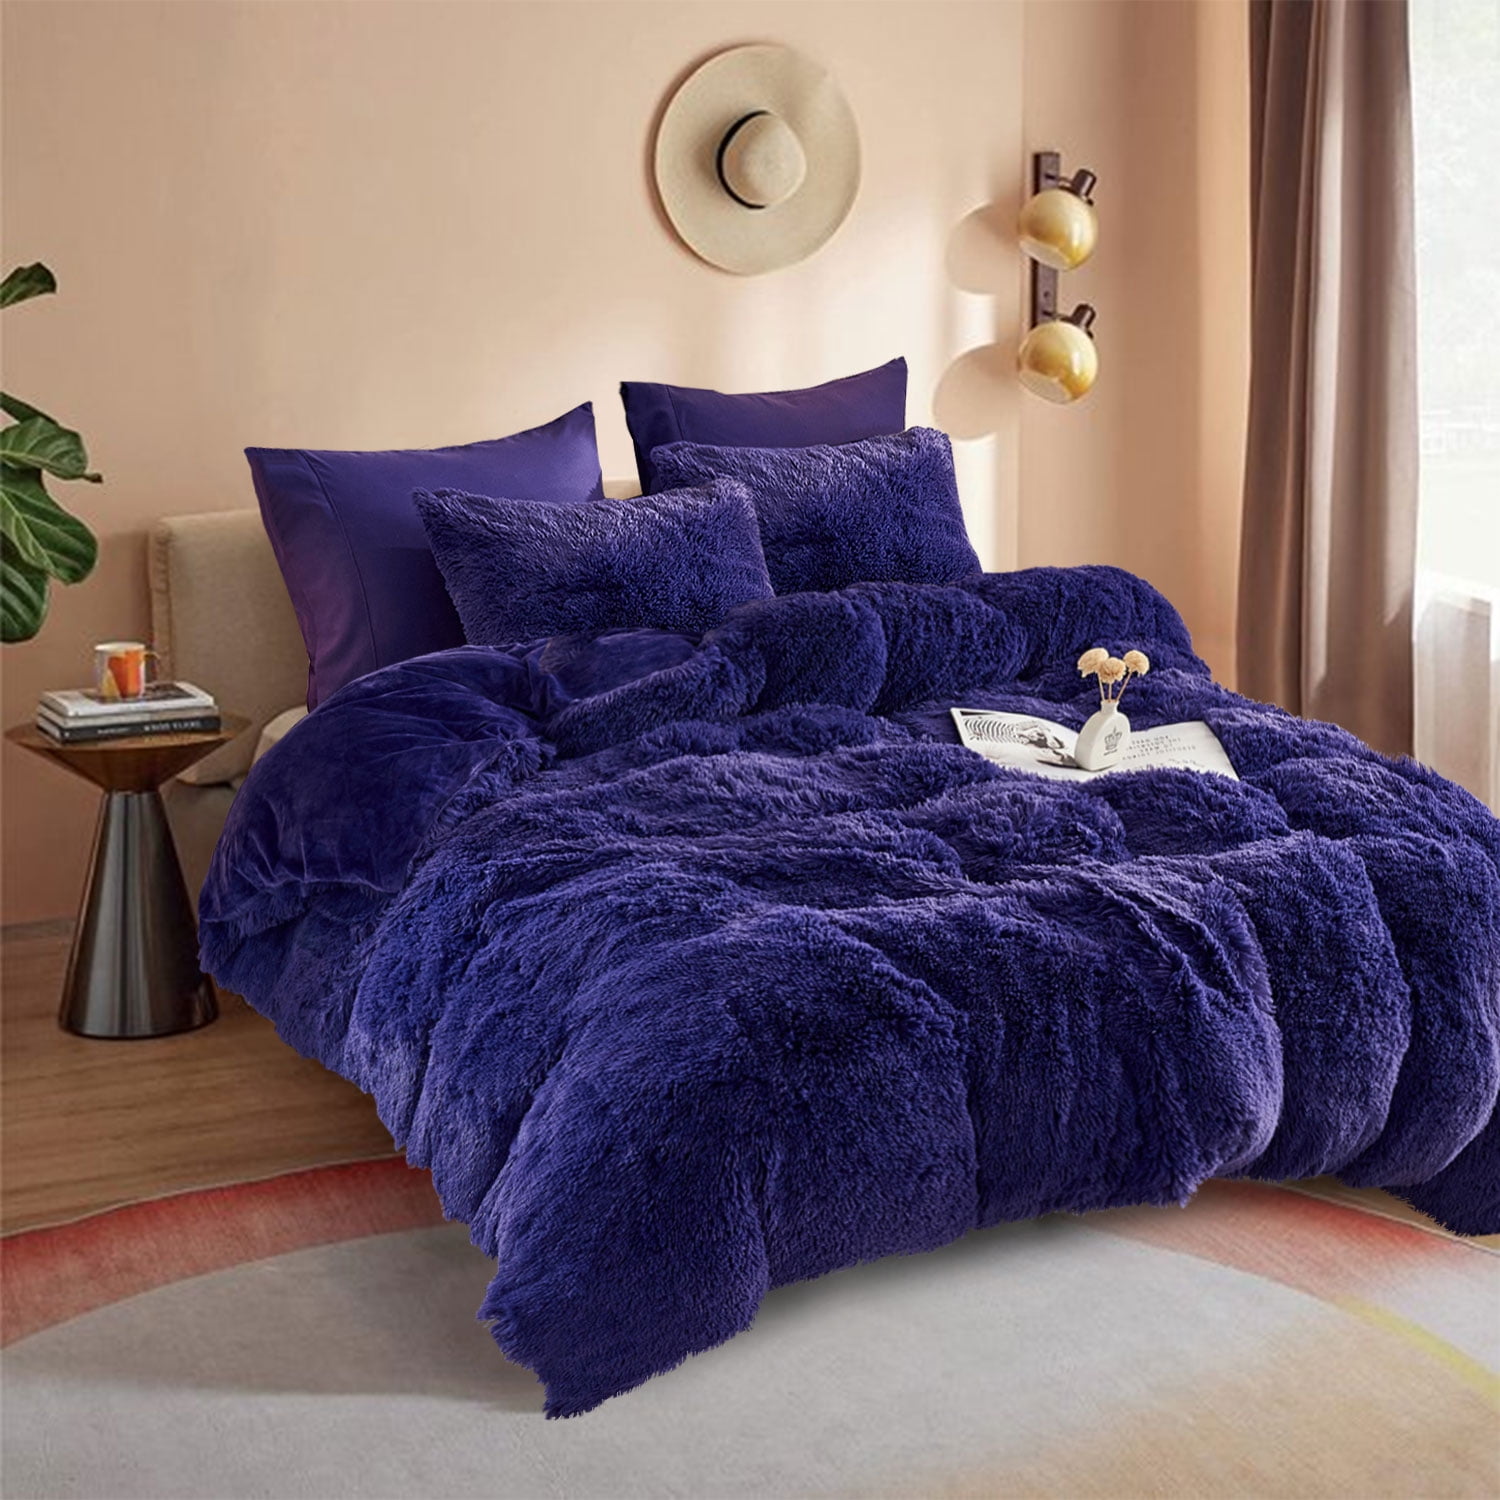 CUDDLY TEDDY BEAR Duvet Cover Set Pillowcase Warm Super Soft All Sizes 11 COLORS 